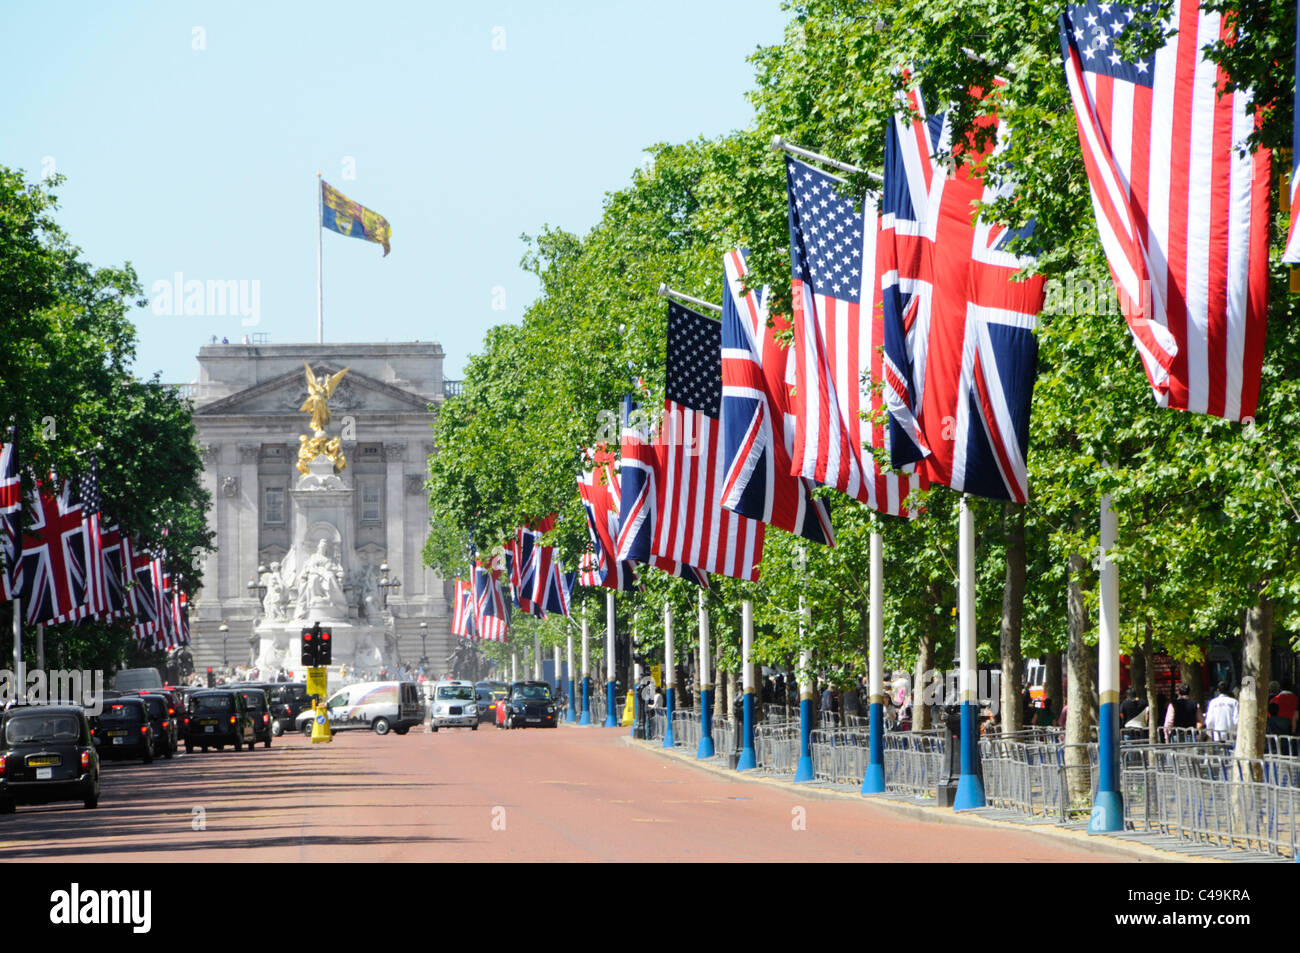 American flag & Union Jack line length of The Mall & Royal Standard Buckingham Palace Obama state presidential visit street scene London England UK Stock Photo